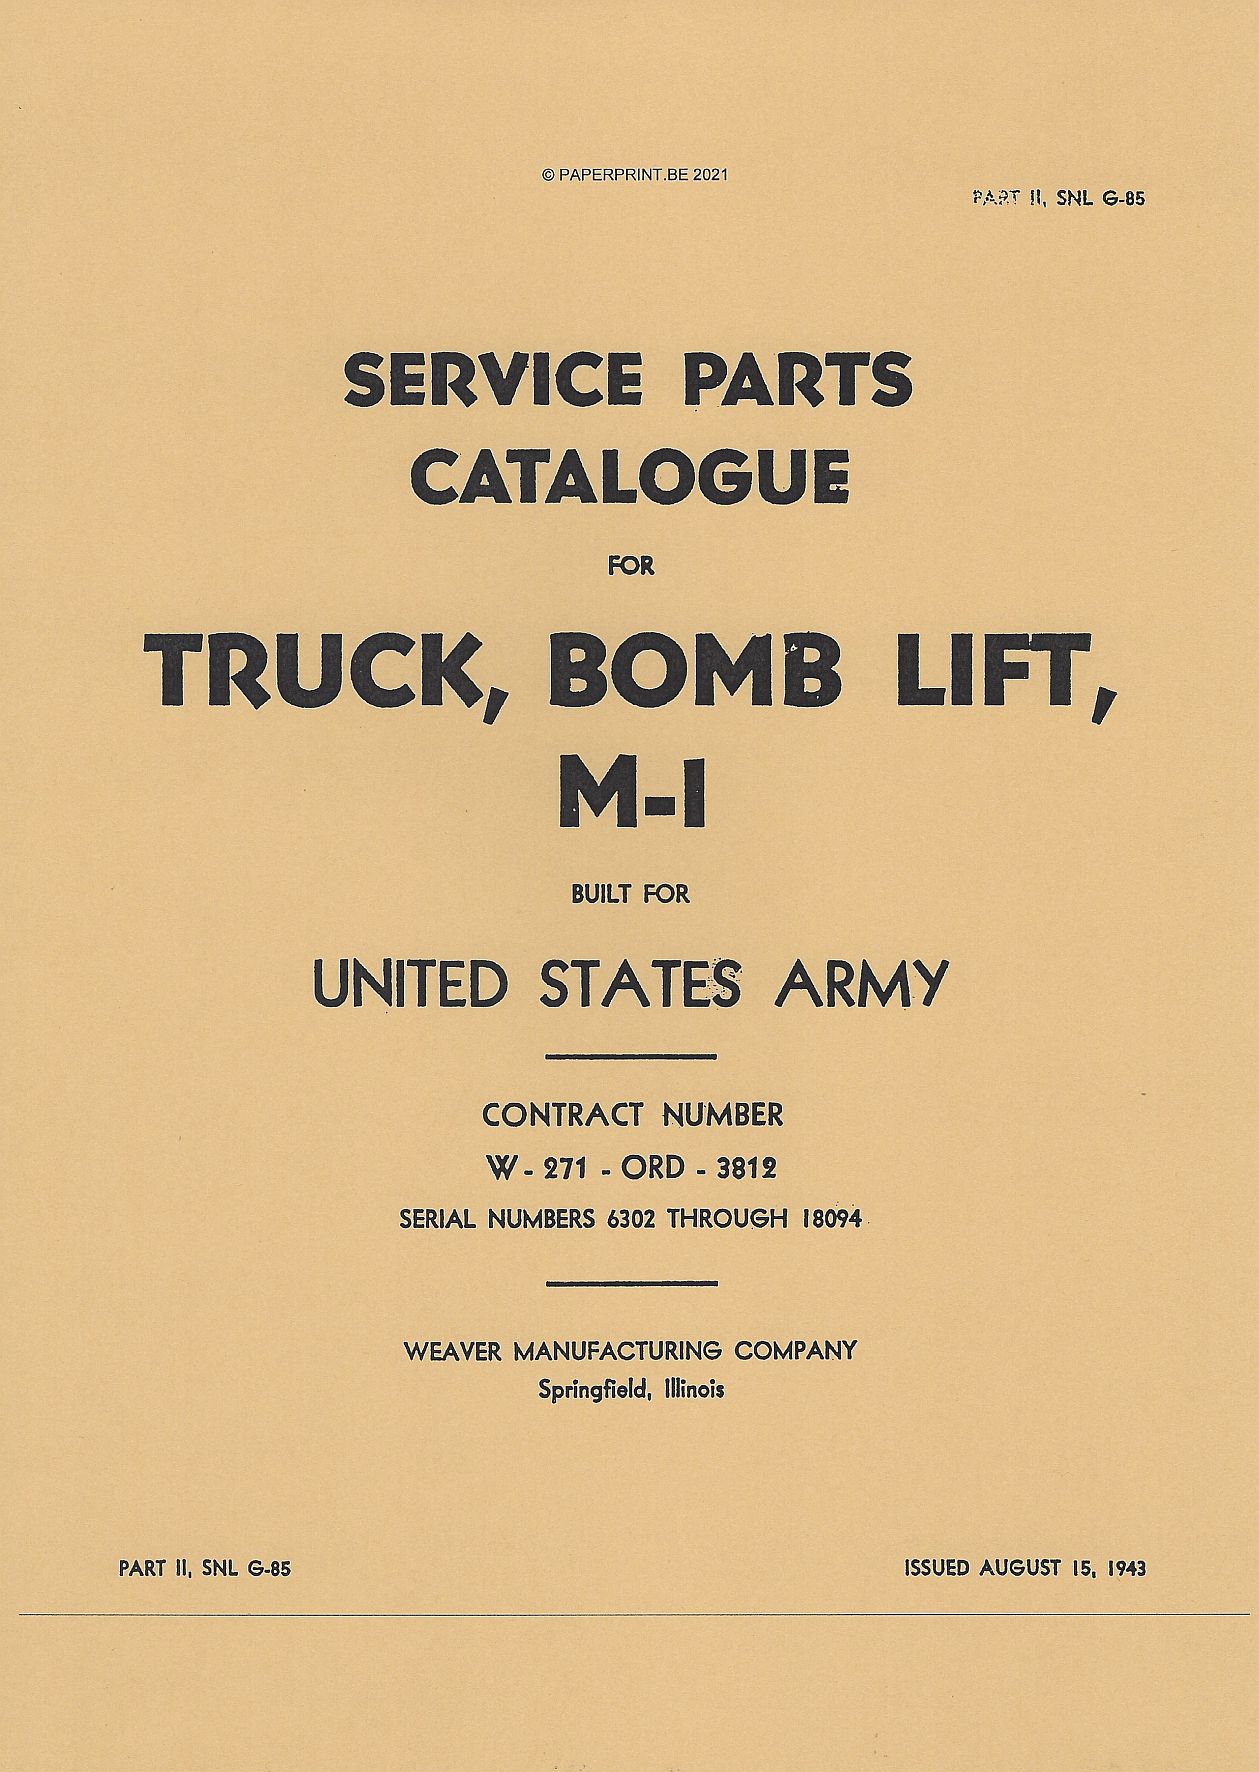 SNL G-85 PART II US SERVICE PARTS CATALOGUE FOR TRUCK, BOMB LIFT, M-1